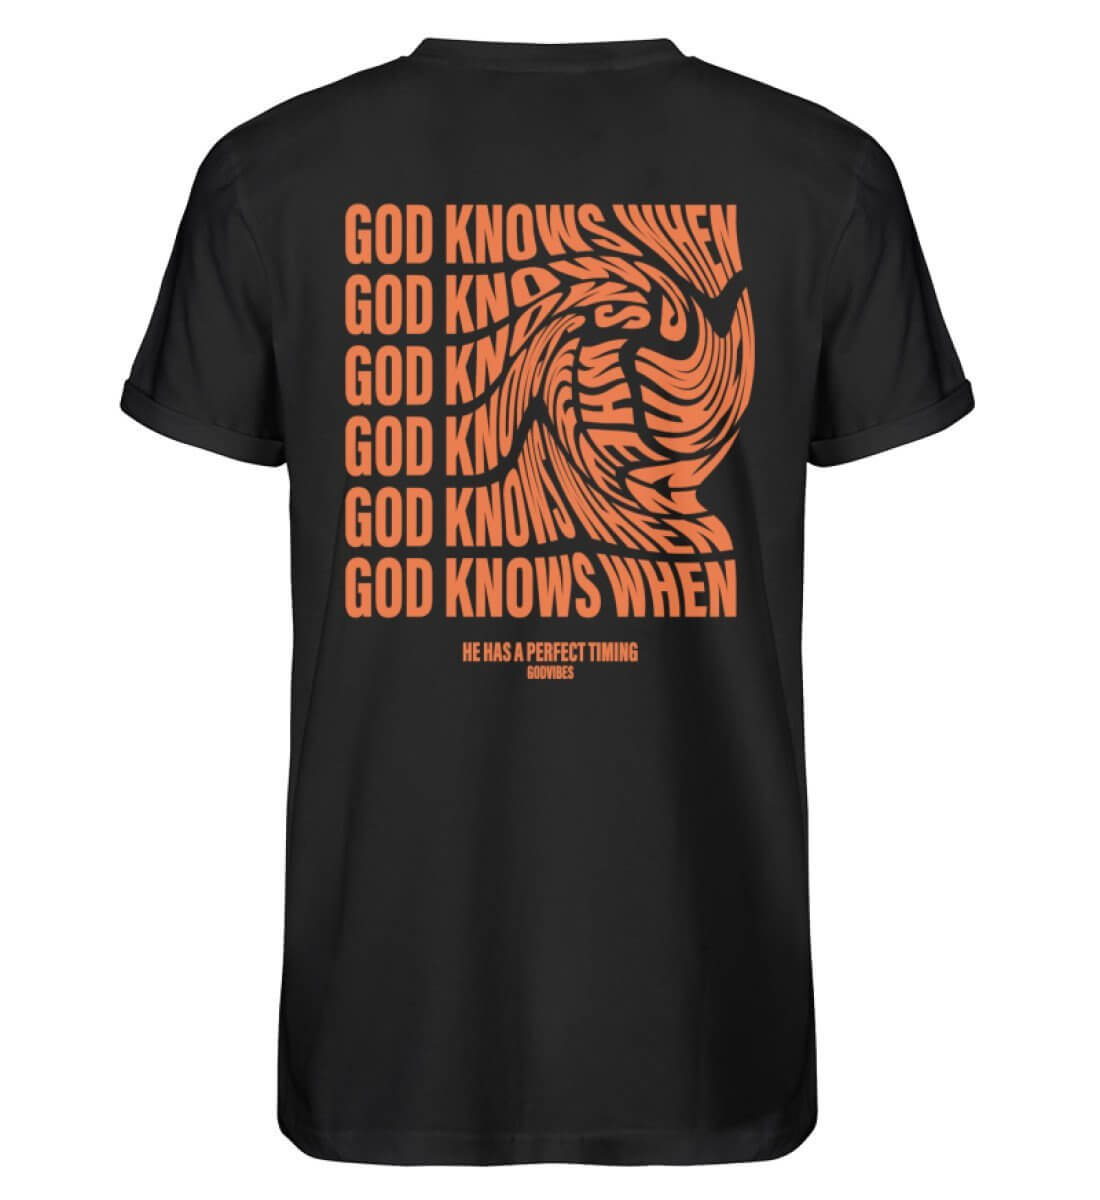 GOD KNOWS WHEN | - Herren RollUp Shirt - GODVIBES